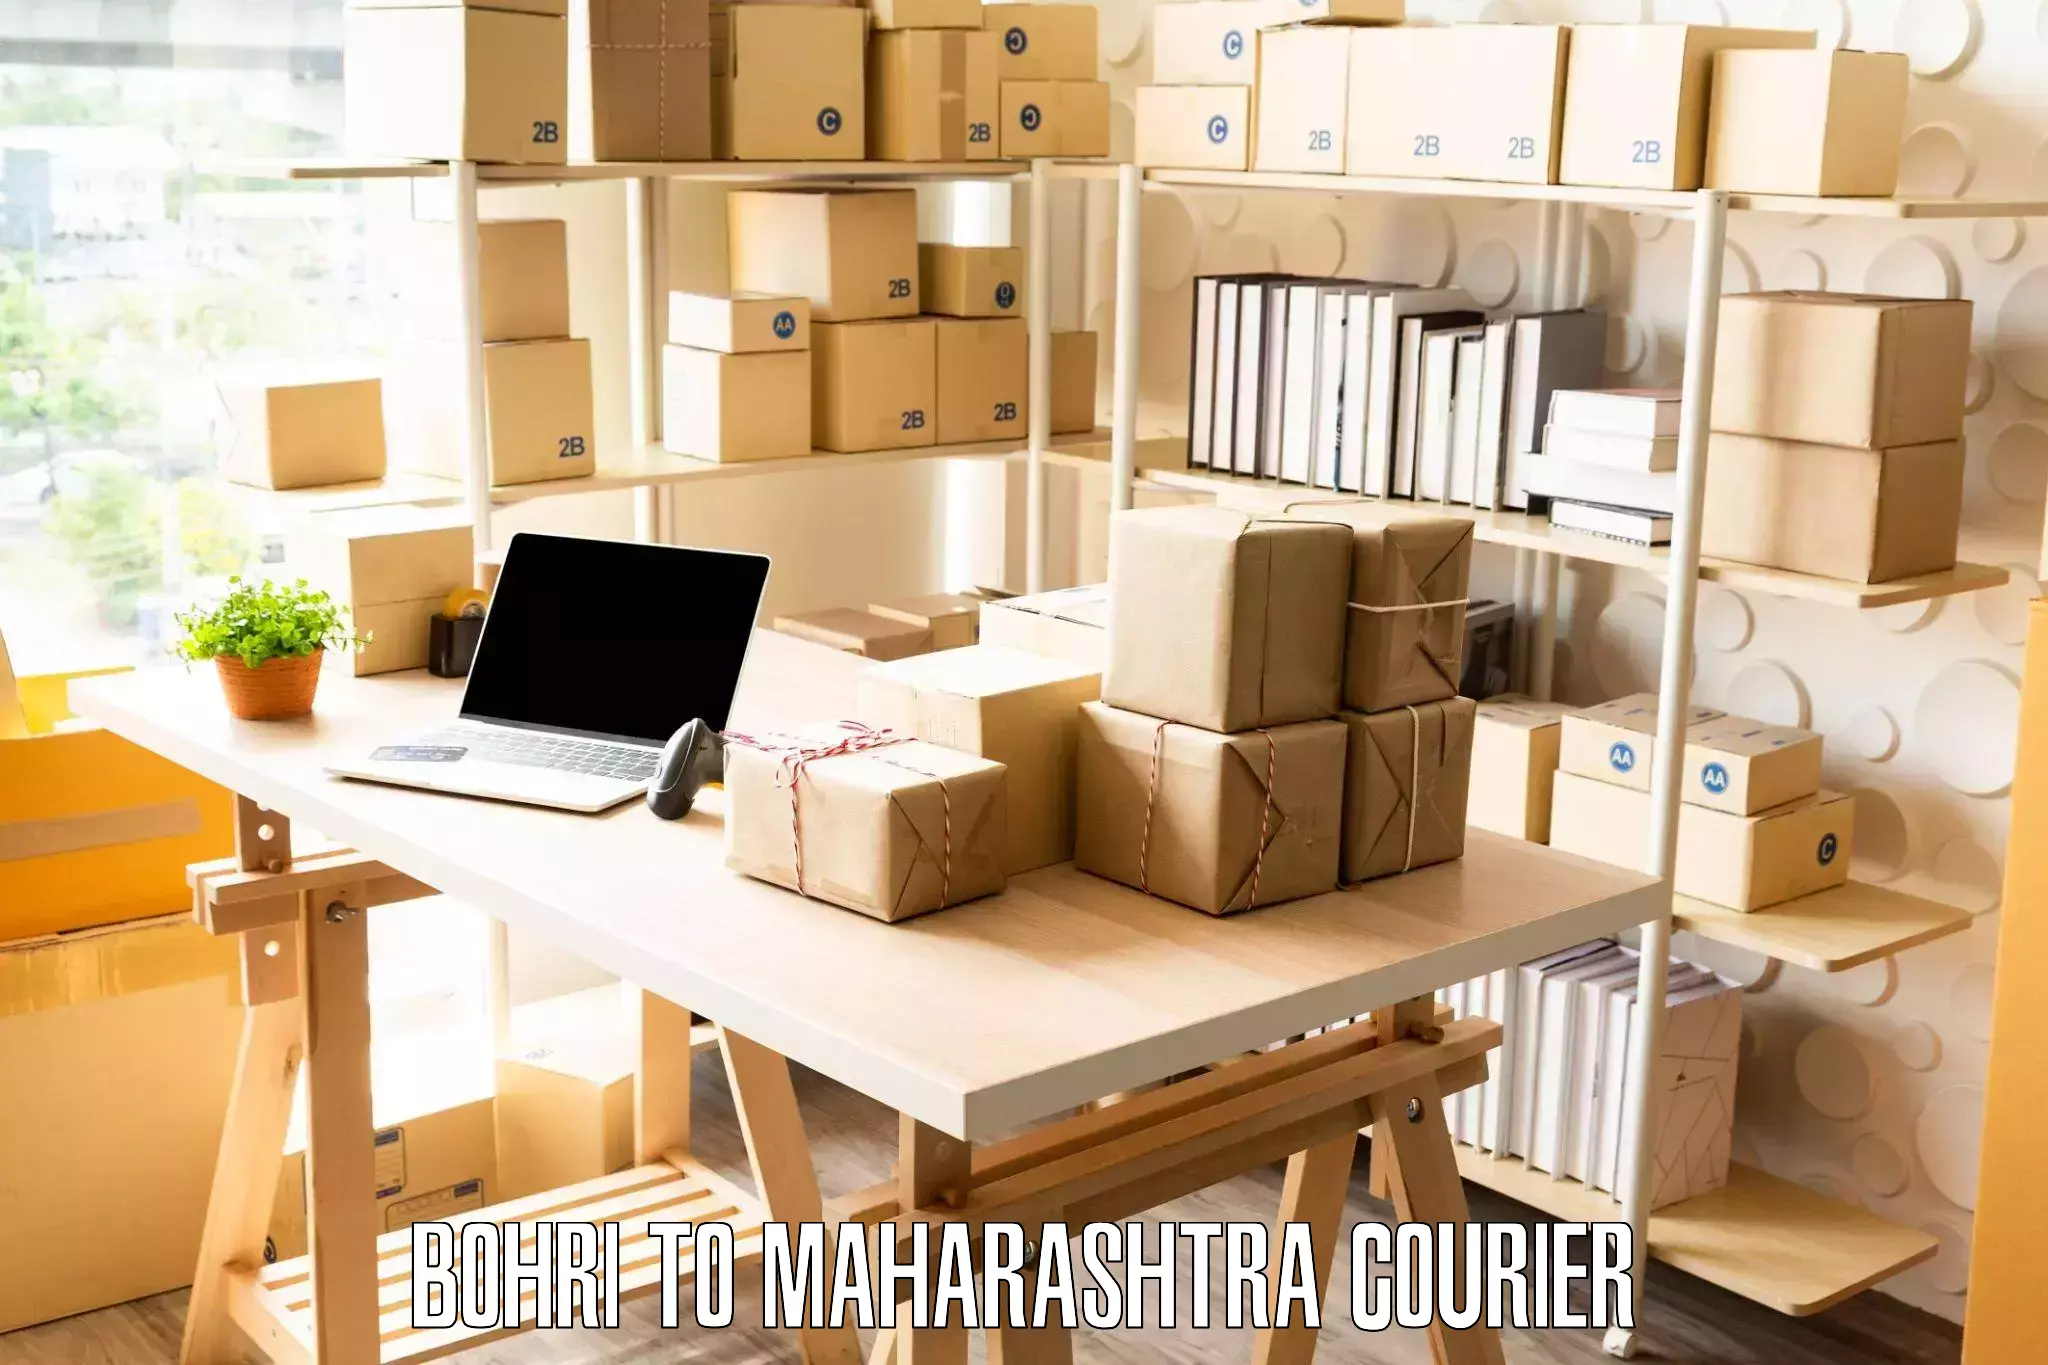 Customized relocation services in Bohri to Maharashtra